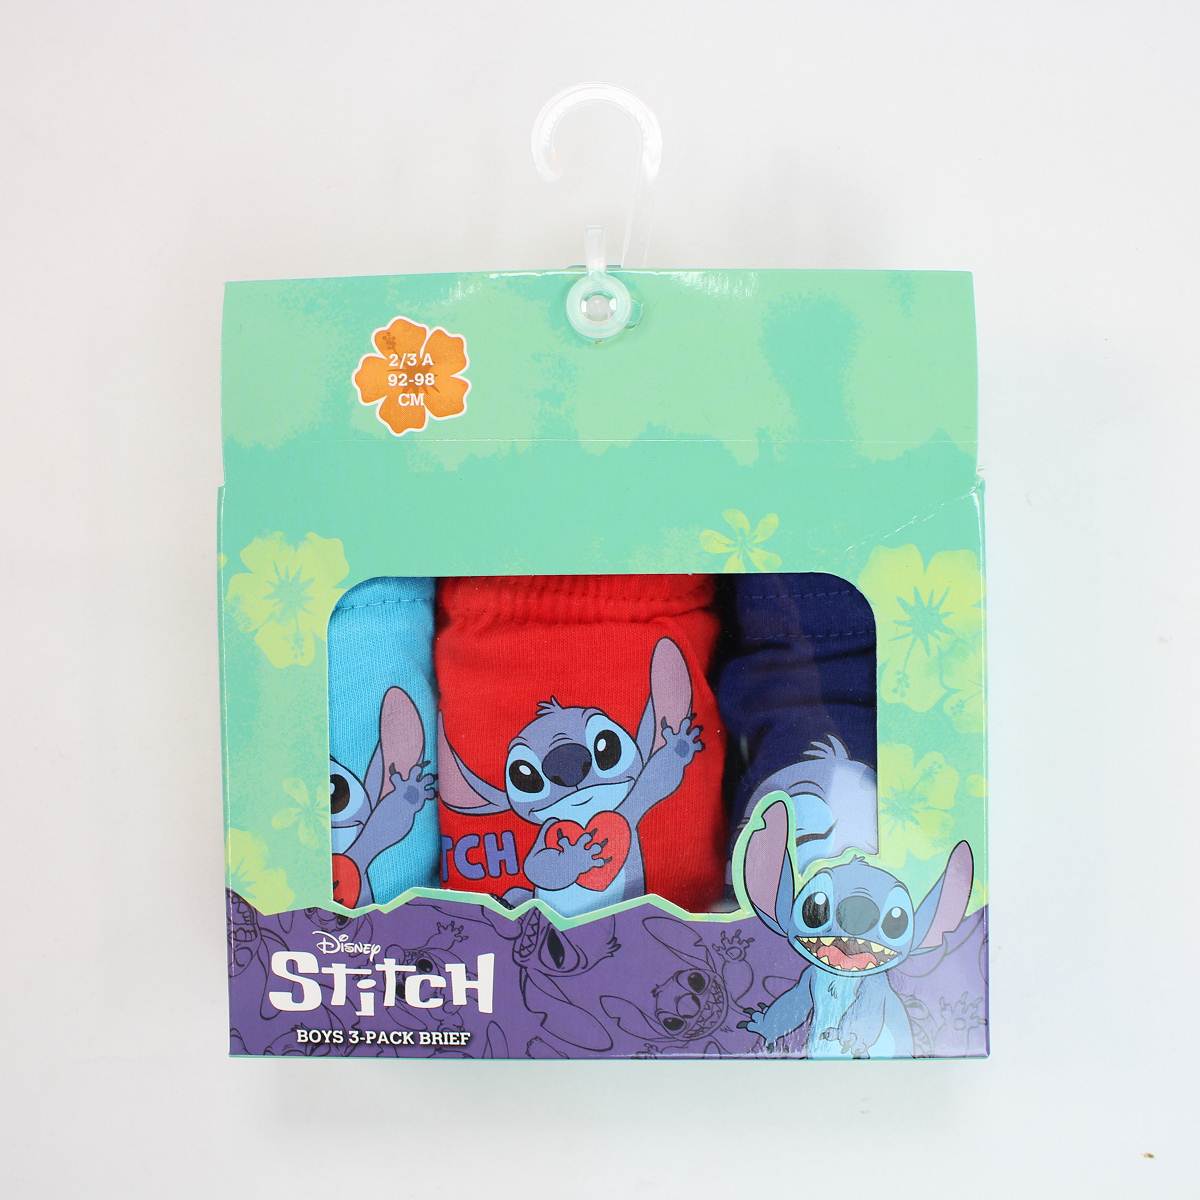 3-pack of ©Disney Lilo & Stitch briefs - 